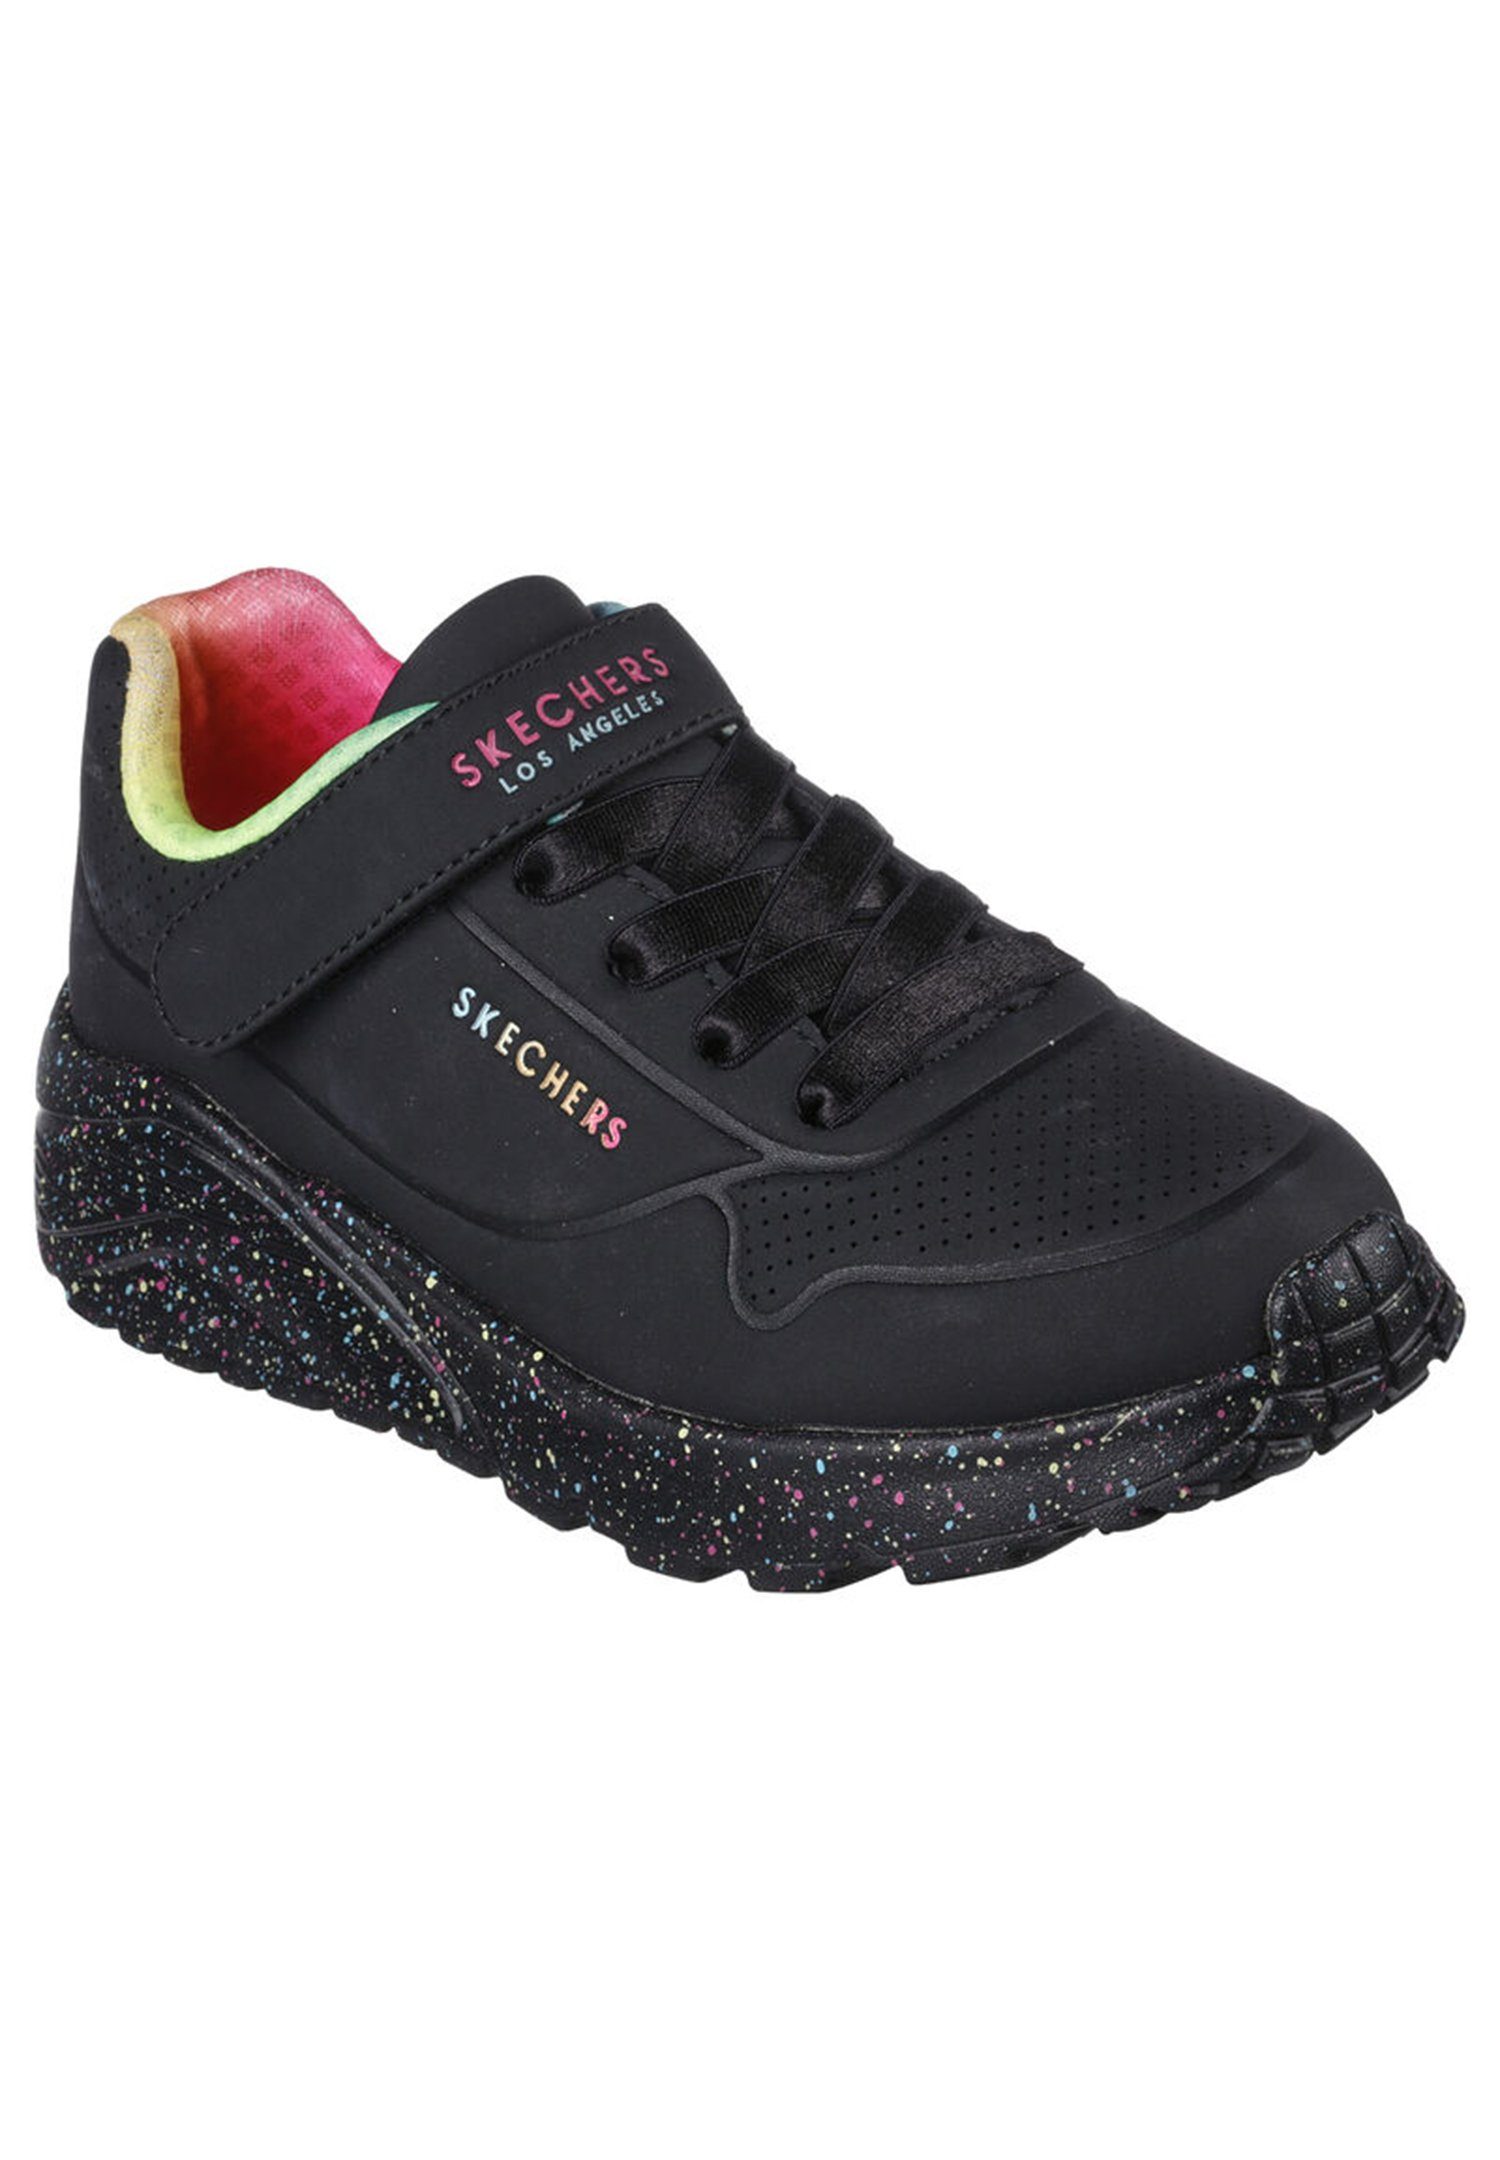 Uno Lite RAINBOW - SPECKS Skechers Sneaker